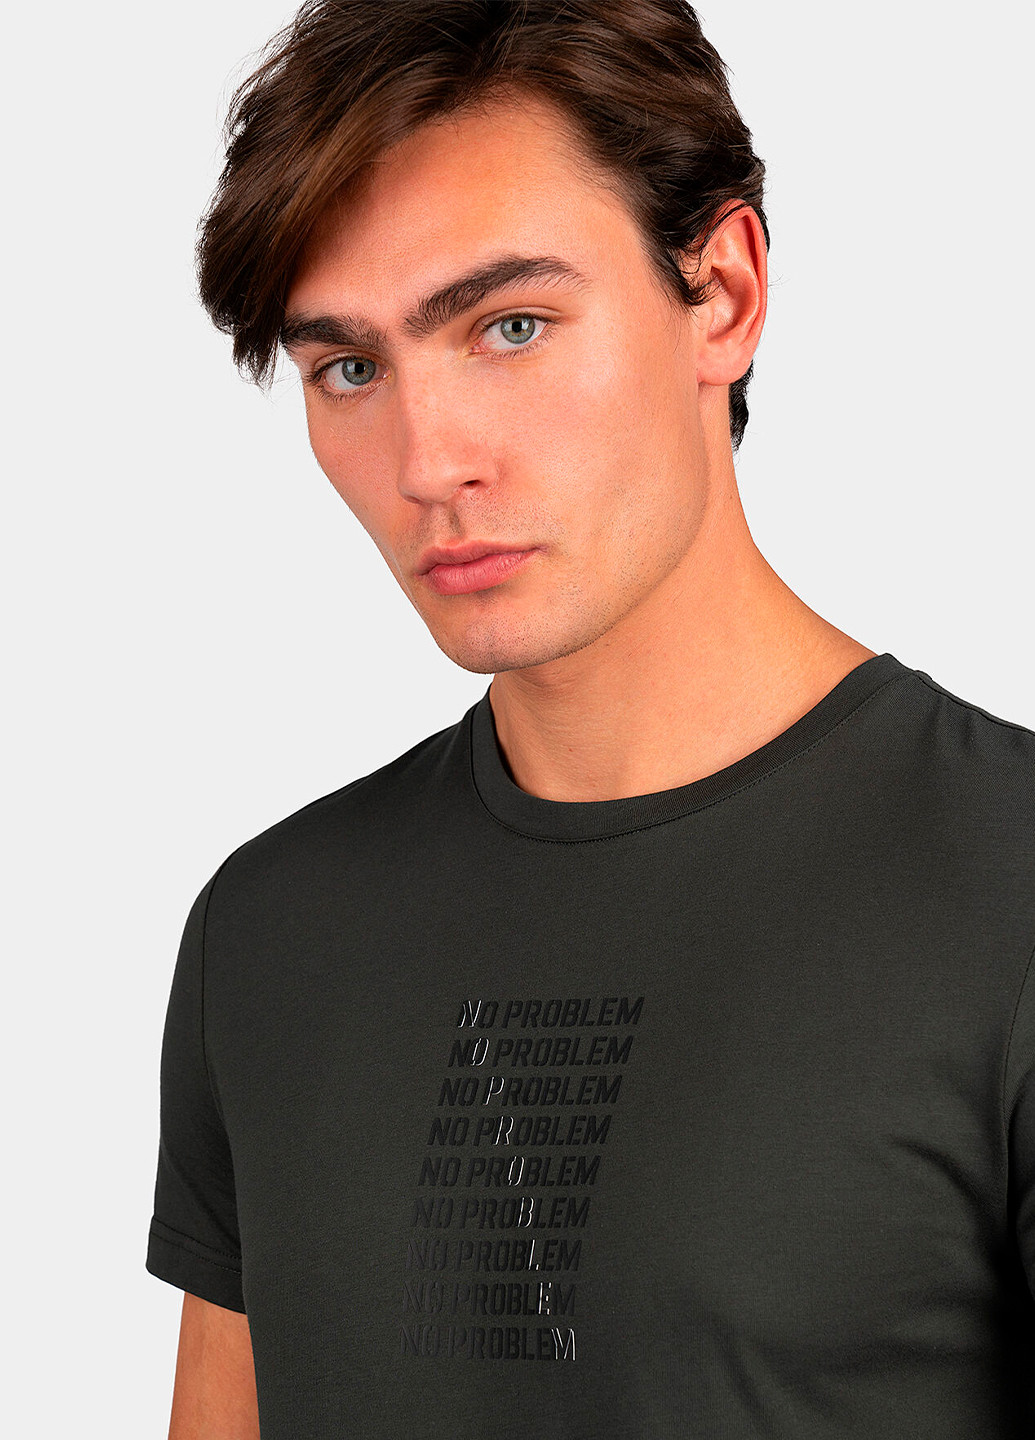 Оливковая мужская оливковая футболка с коротким рукавом Antony Morato